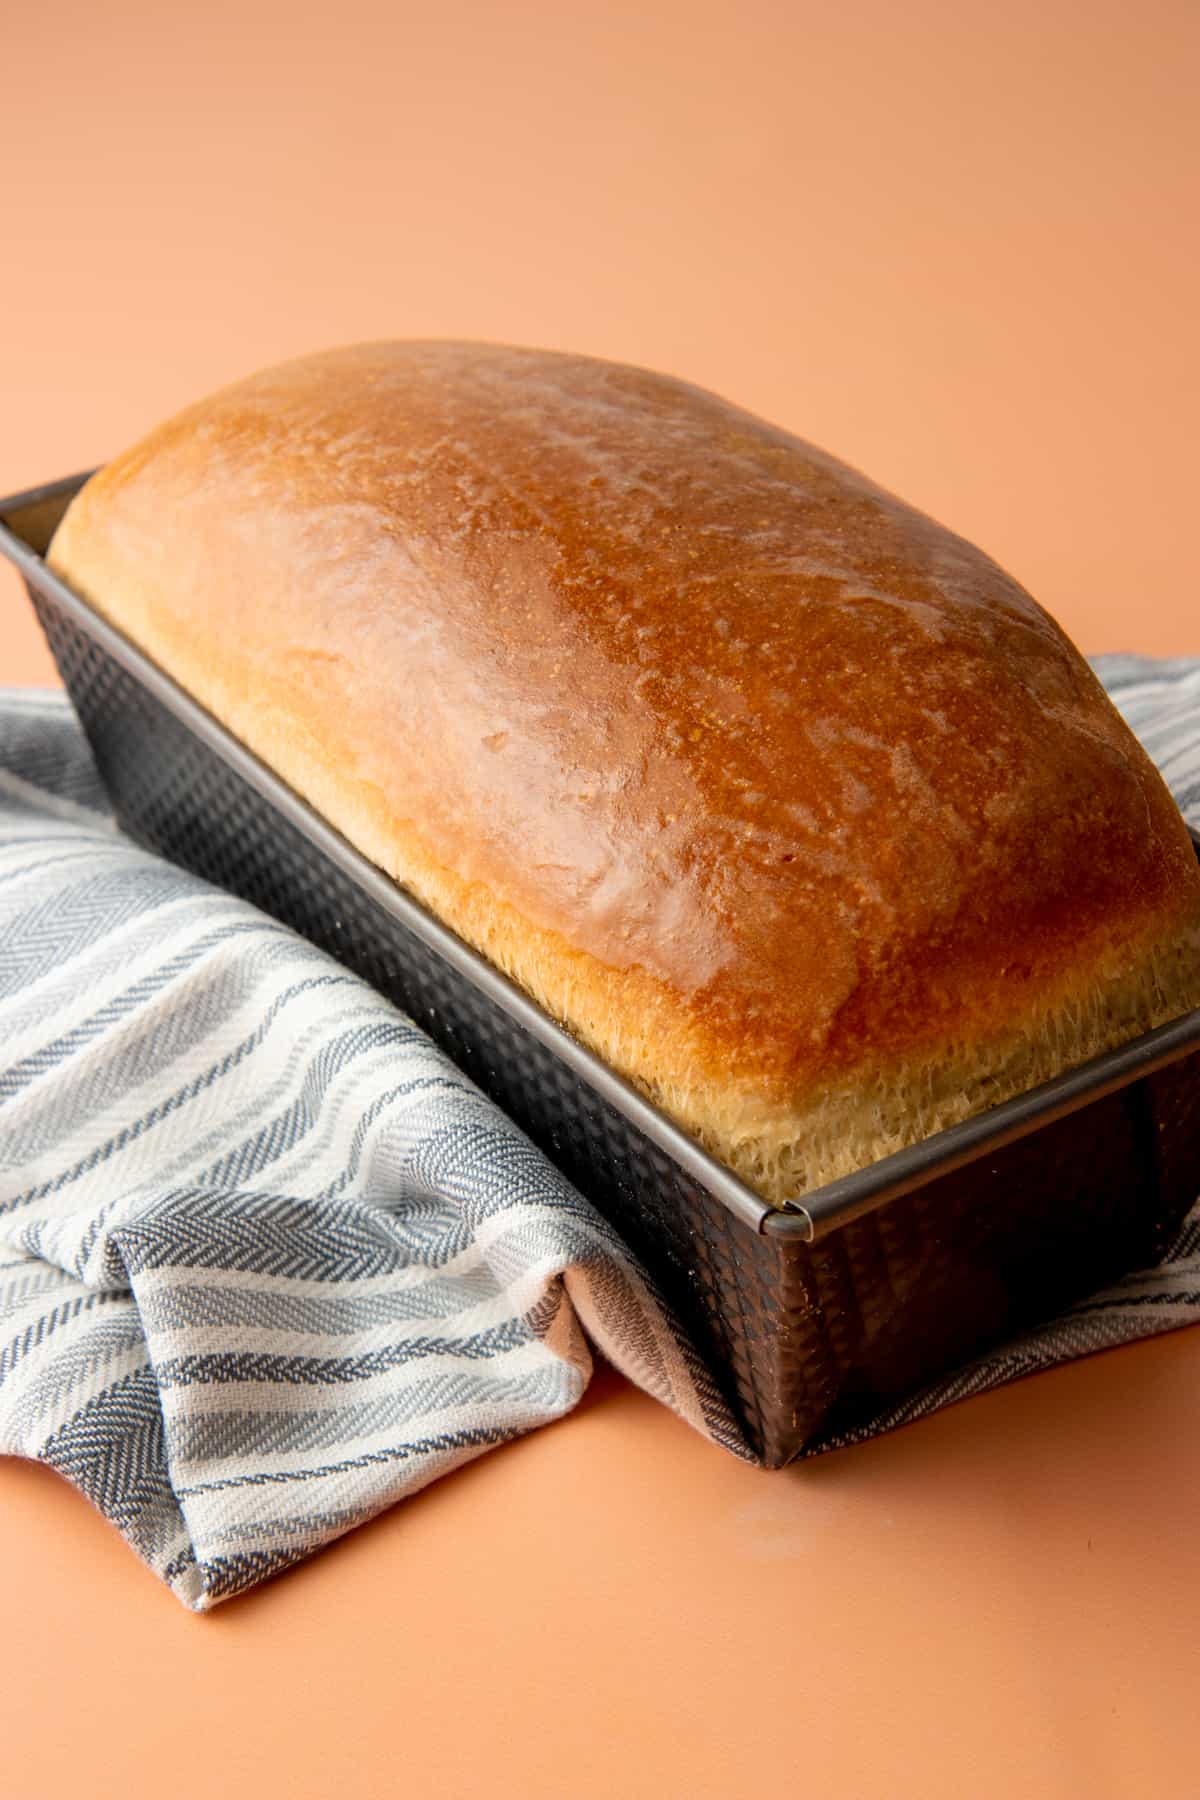 https://wholefully.com/wp-content/uploads/2020/03/baked-sandwich-bread.jpg